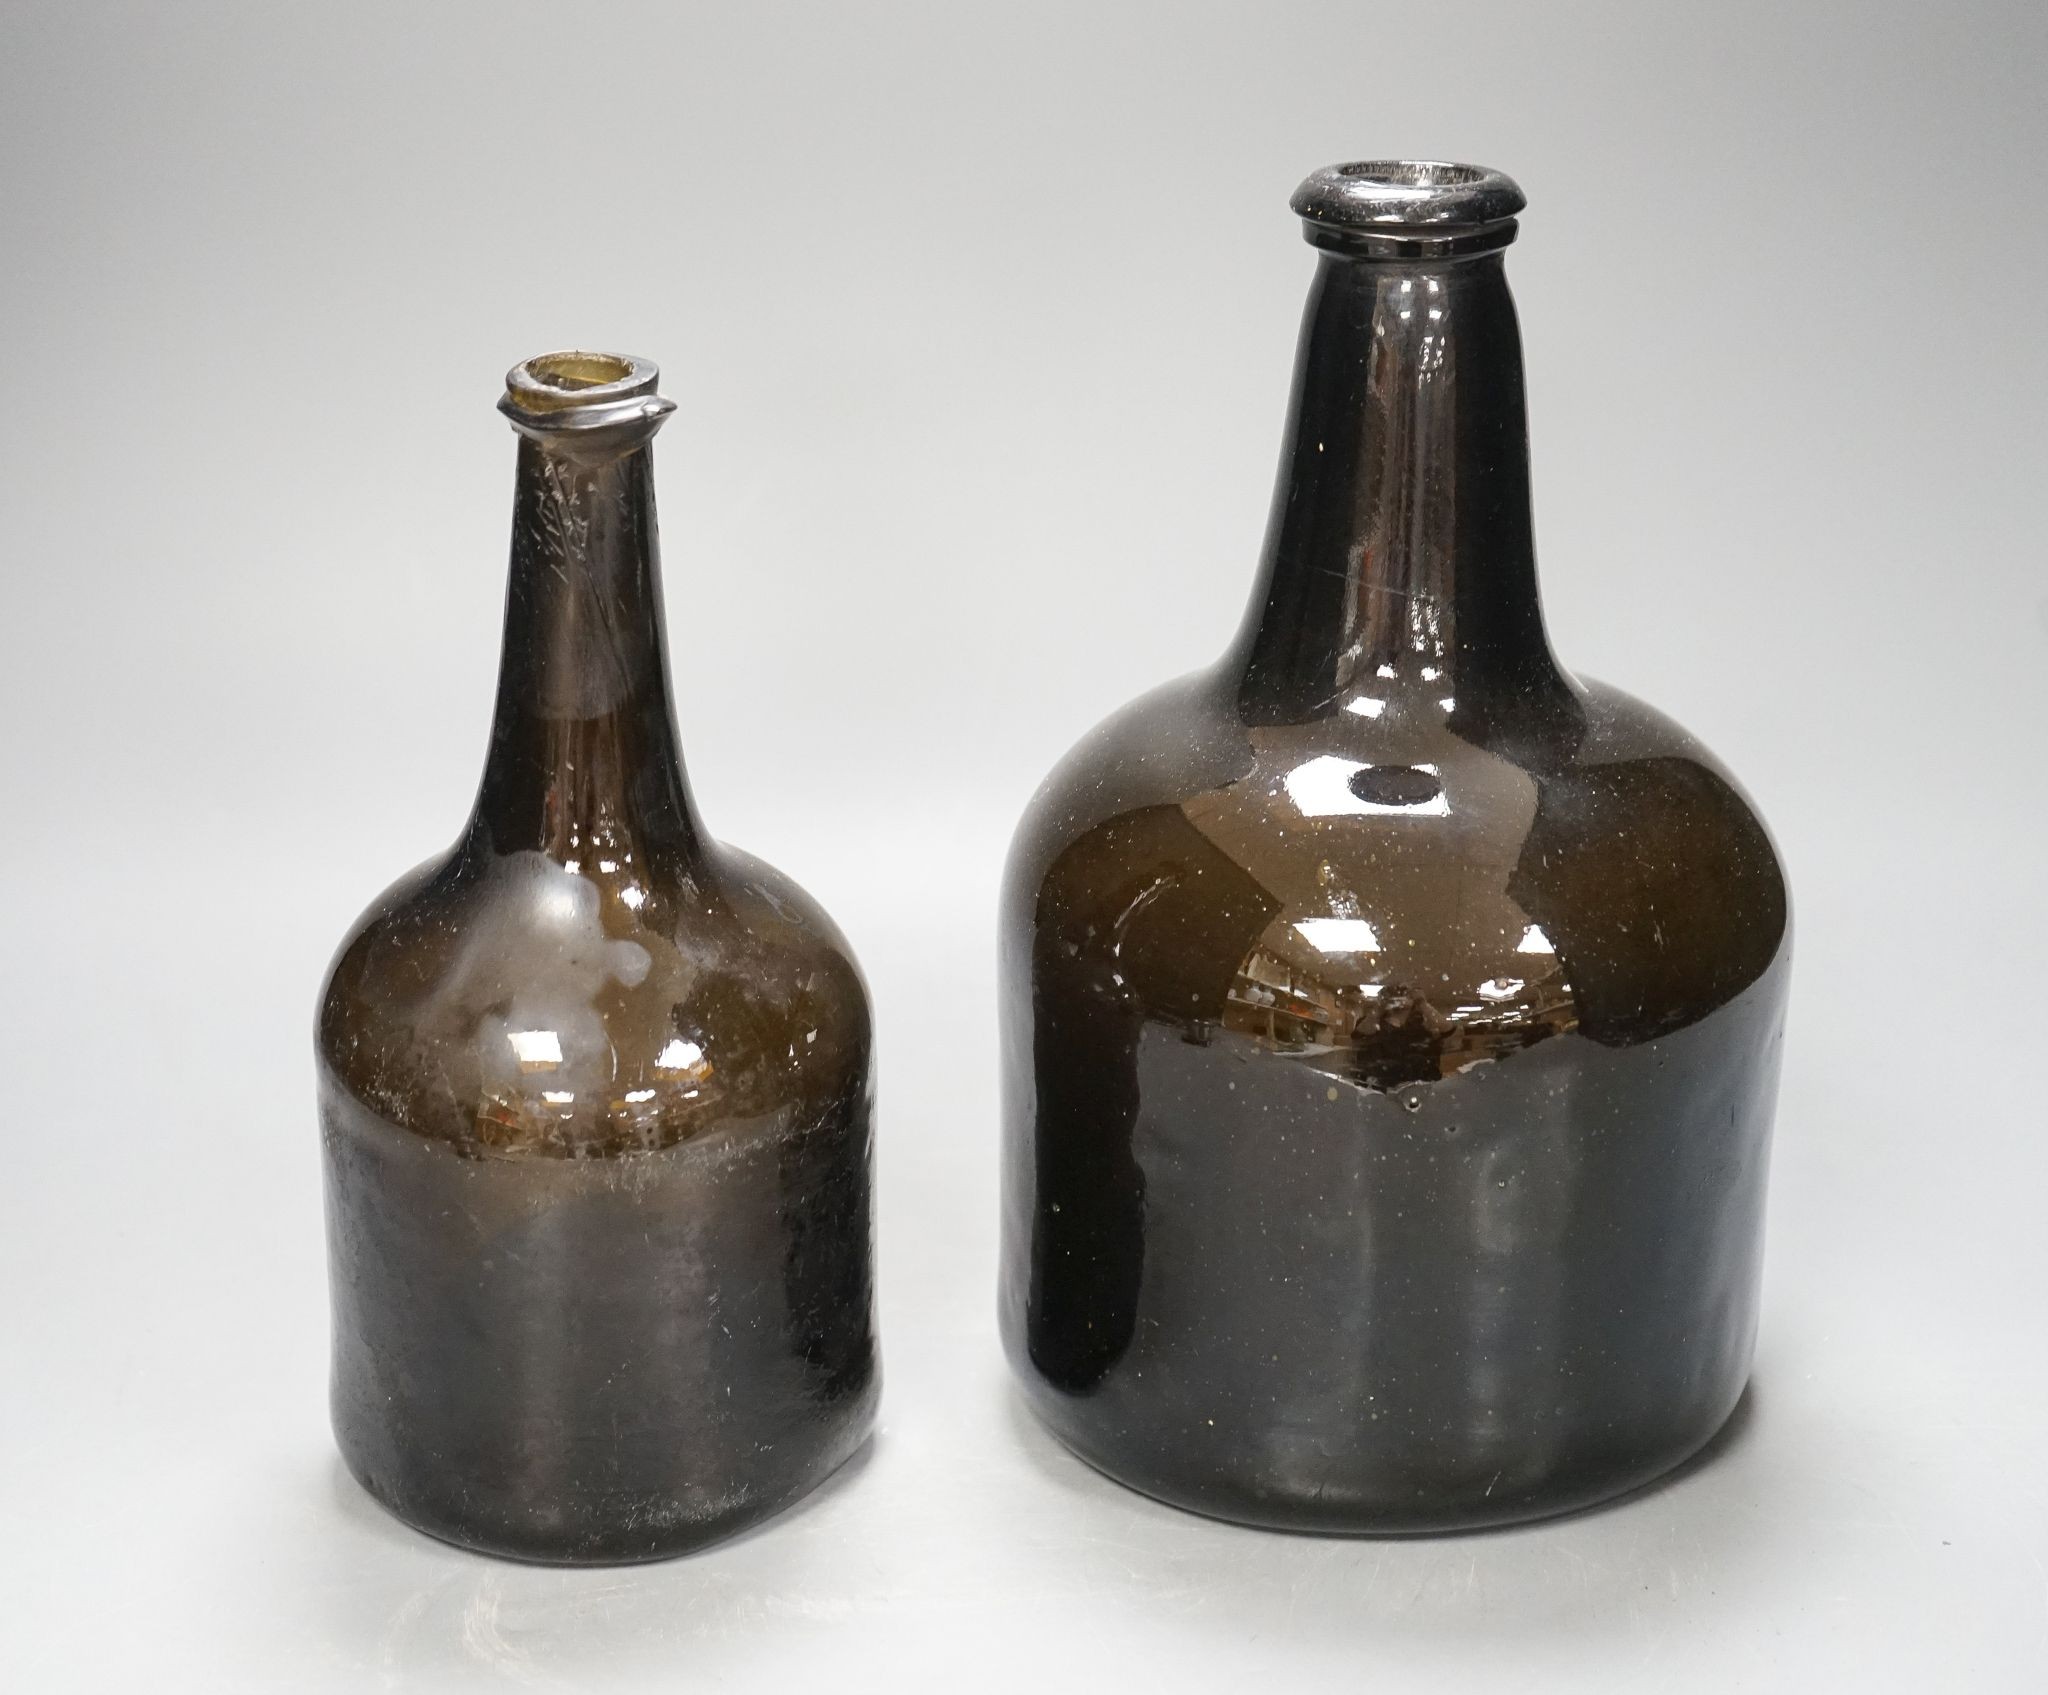 Two mid 18th century glass mallet-shape wine bottles, tallest 27cm